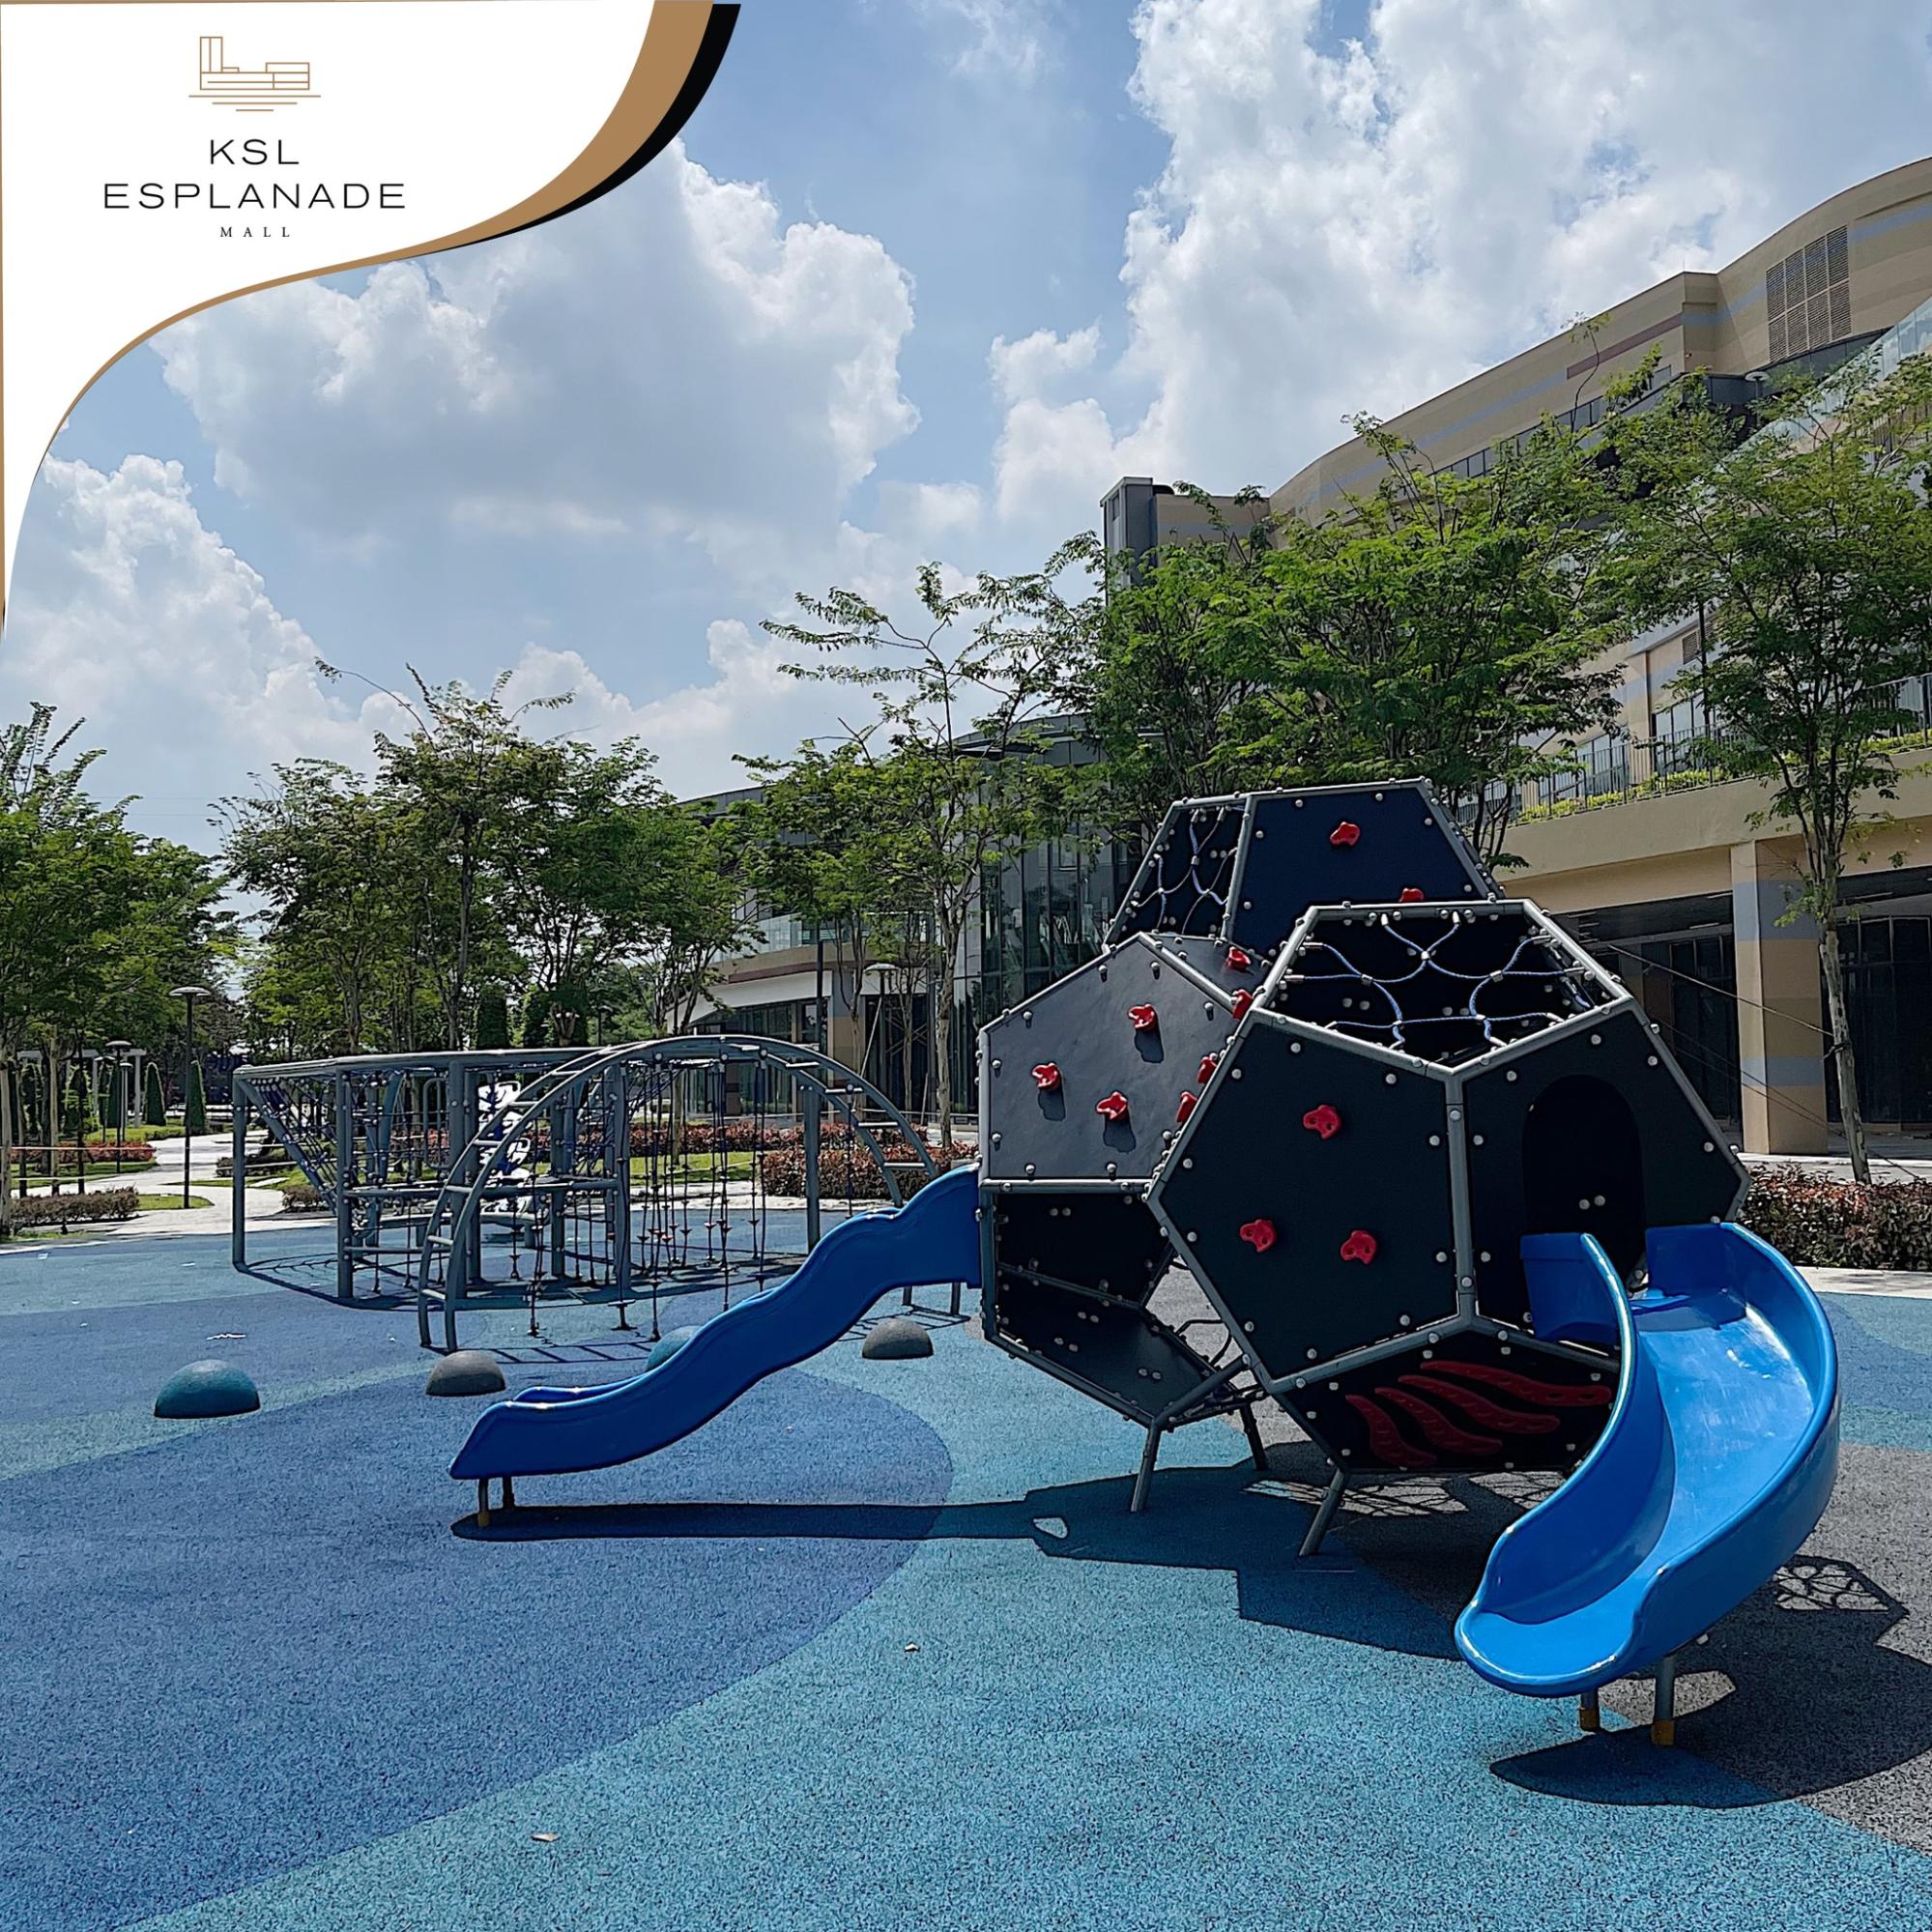 Unique children's playground - KSL Esplanade Mall opening in Klang